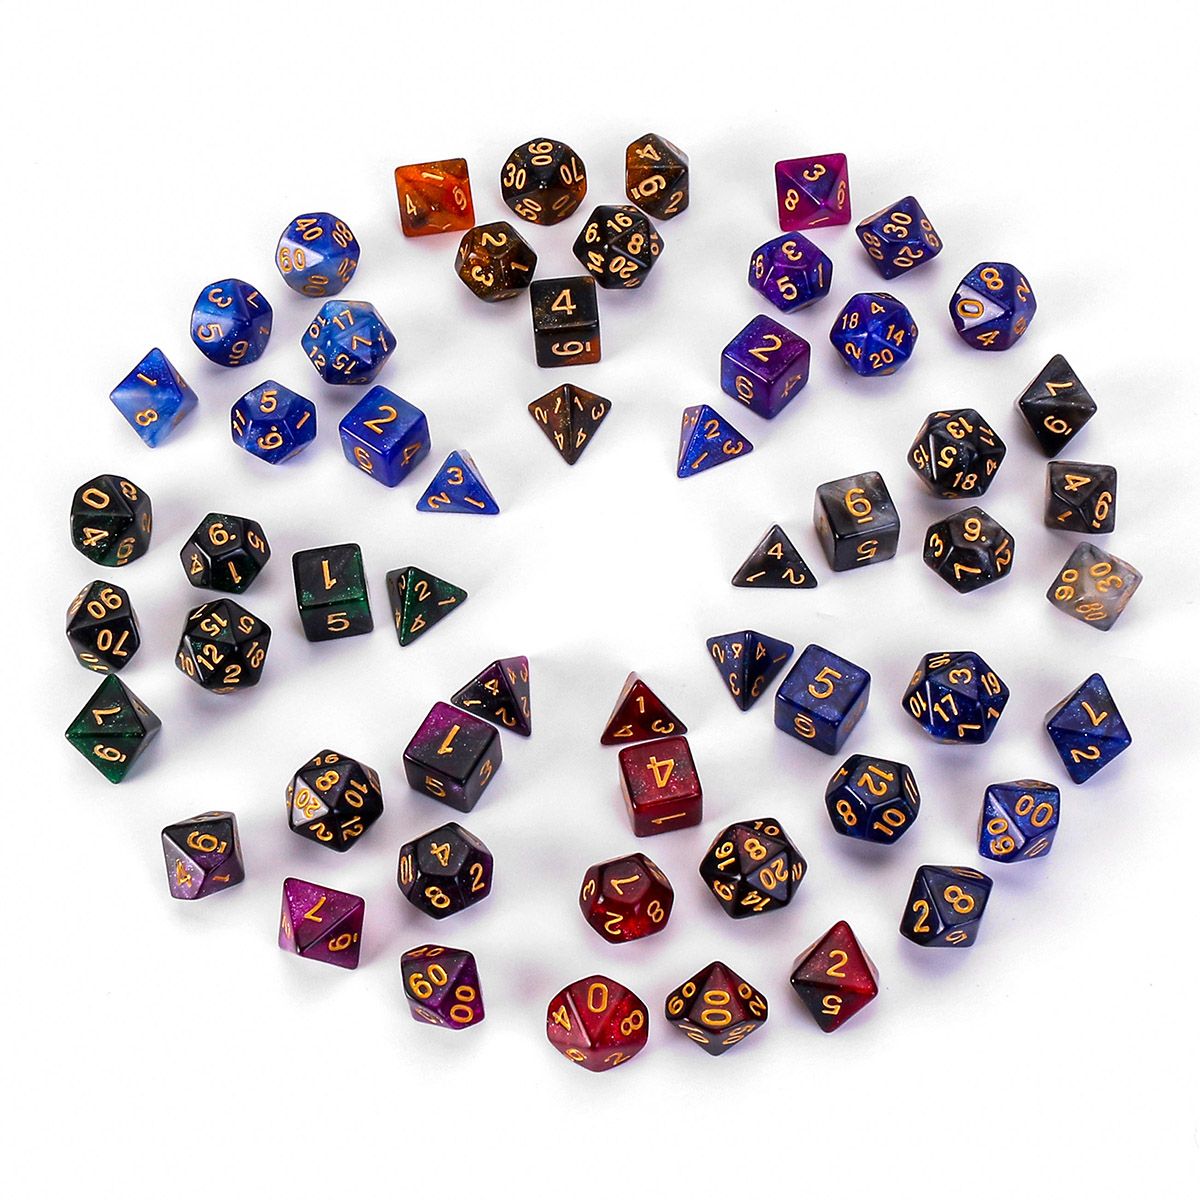 7Pcs-Galaxy-Polyhedral-Dices-For-Dungeons-Dragons-Games-D20-D12-D10-D8-D6-D4-Bag-1633182